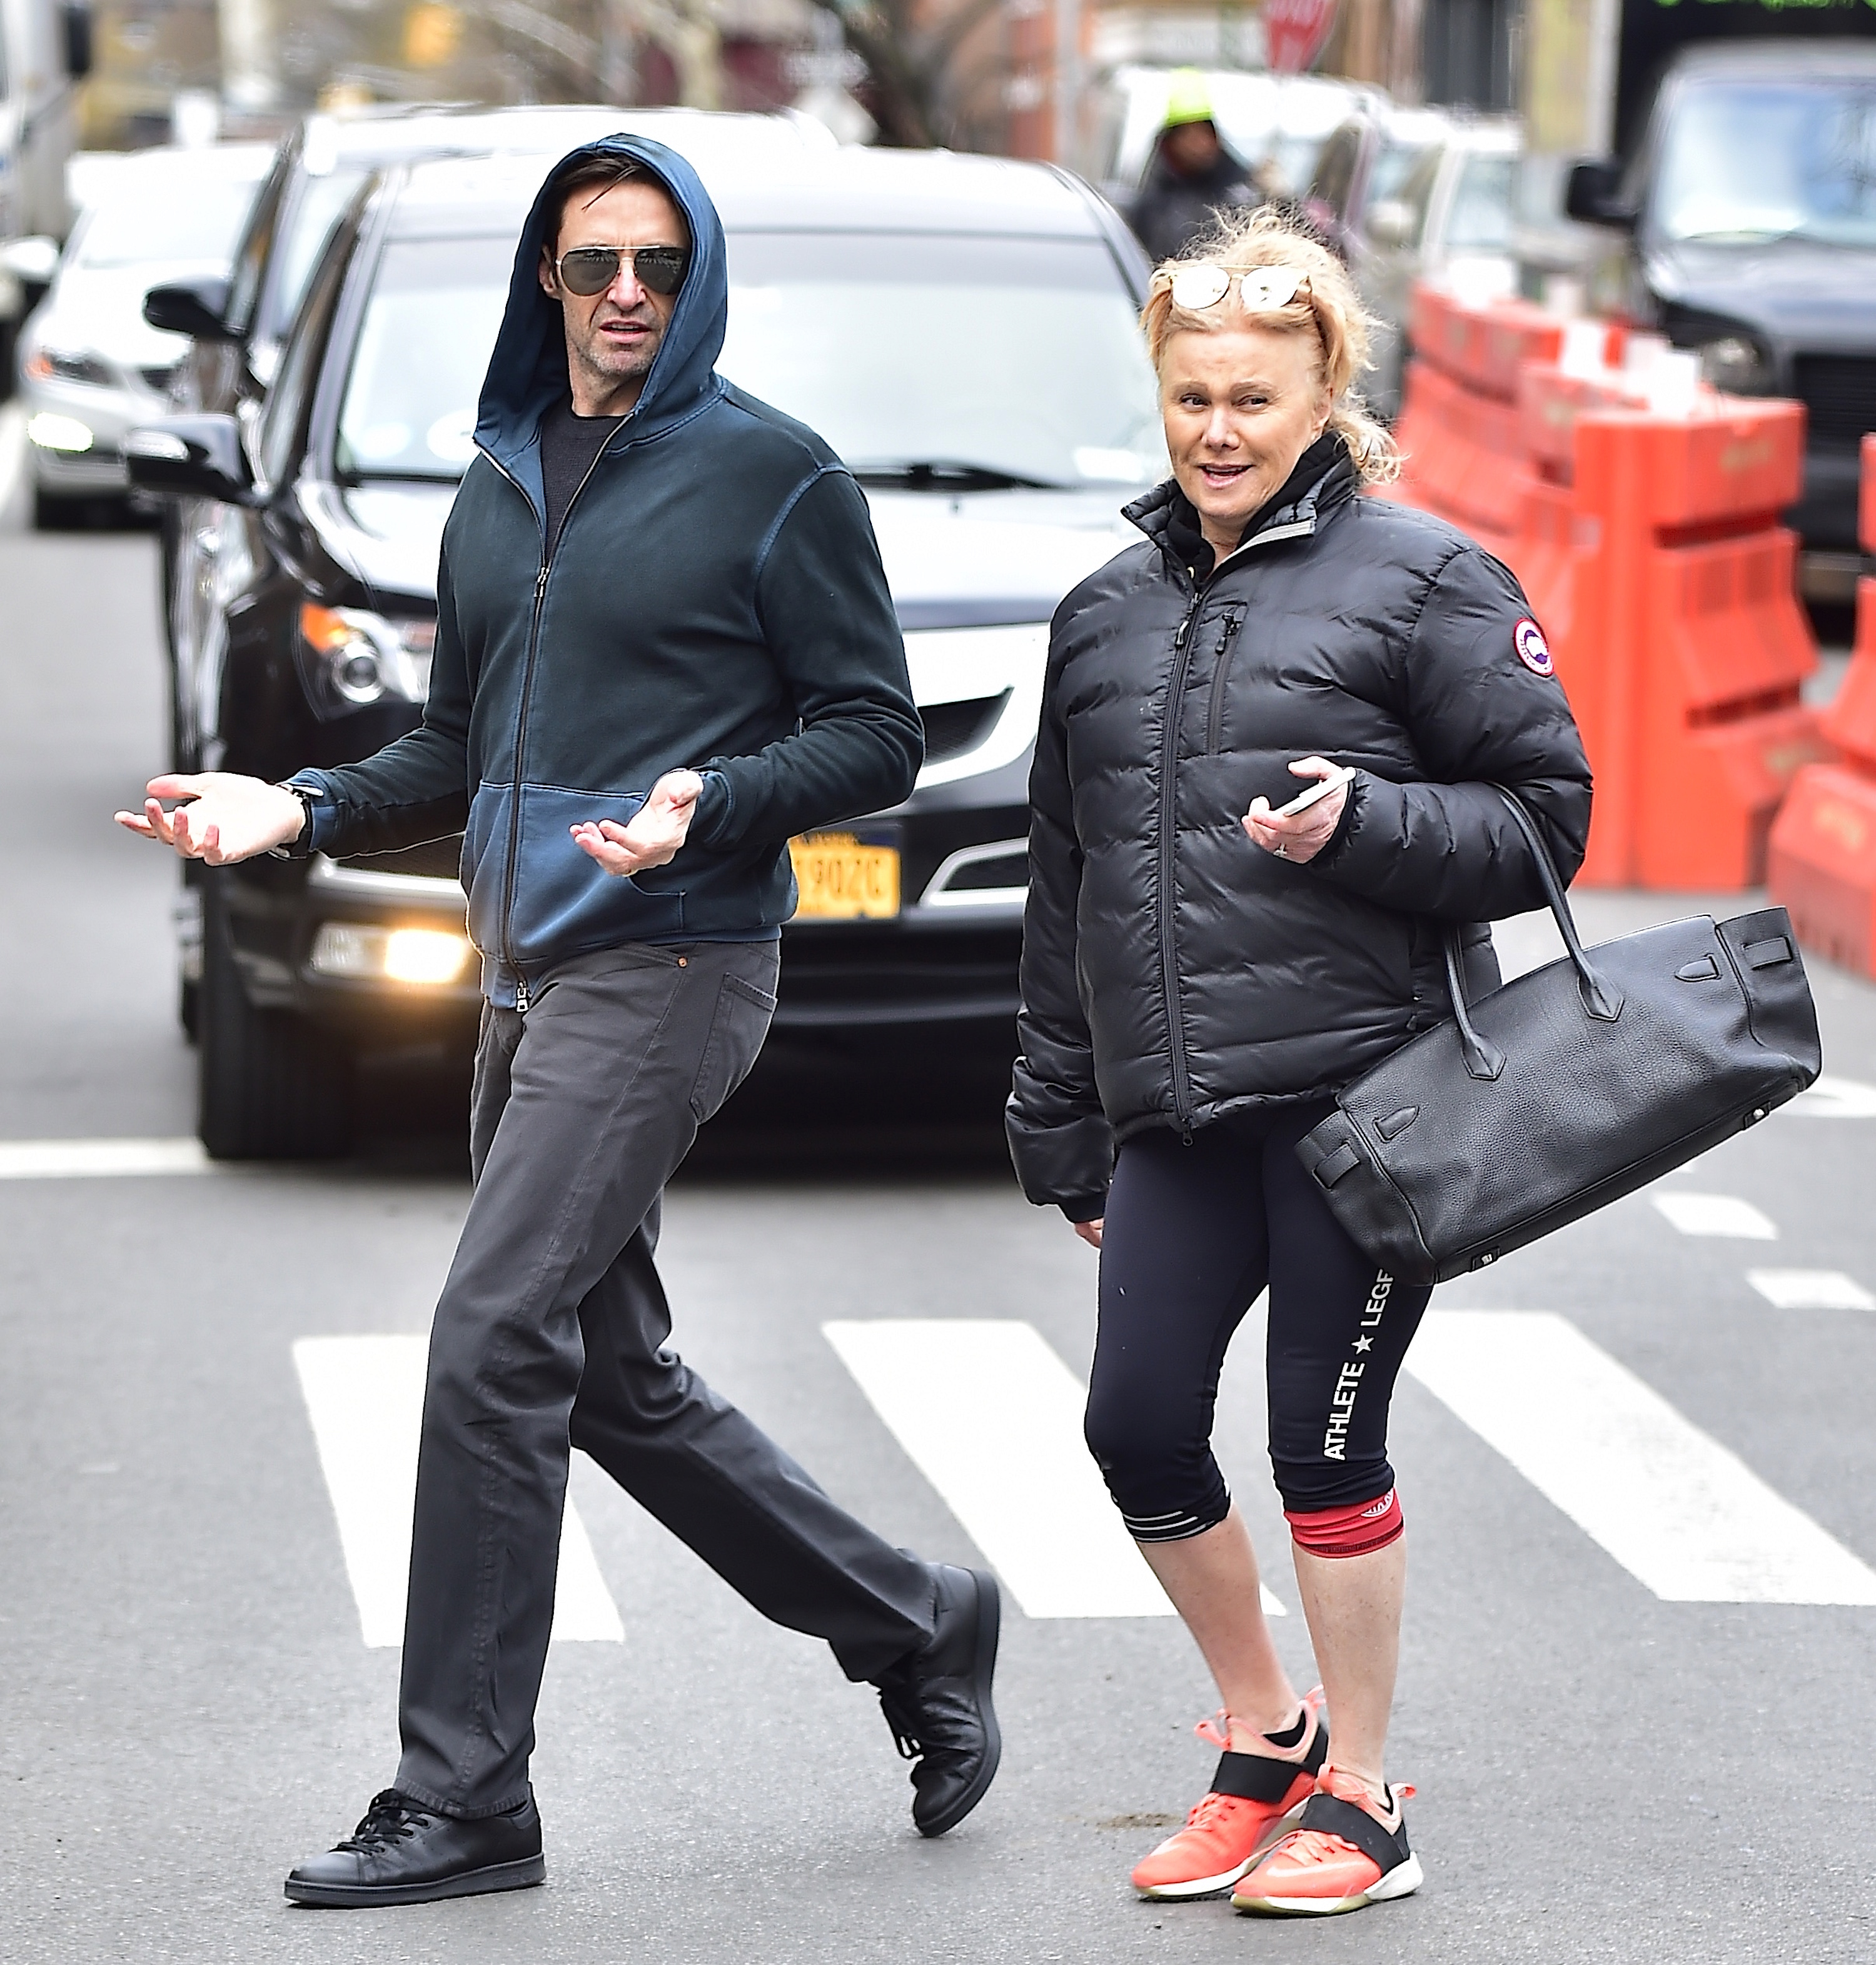 Hugh Jackman and wife Deborra-Lee Furness in Australia in 2015 | Source: Getty images